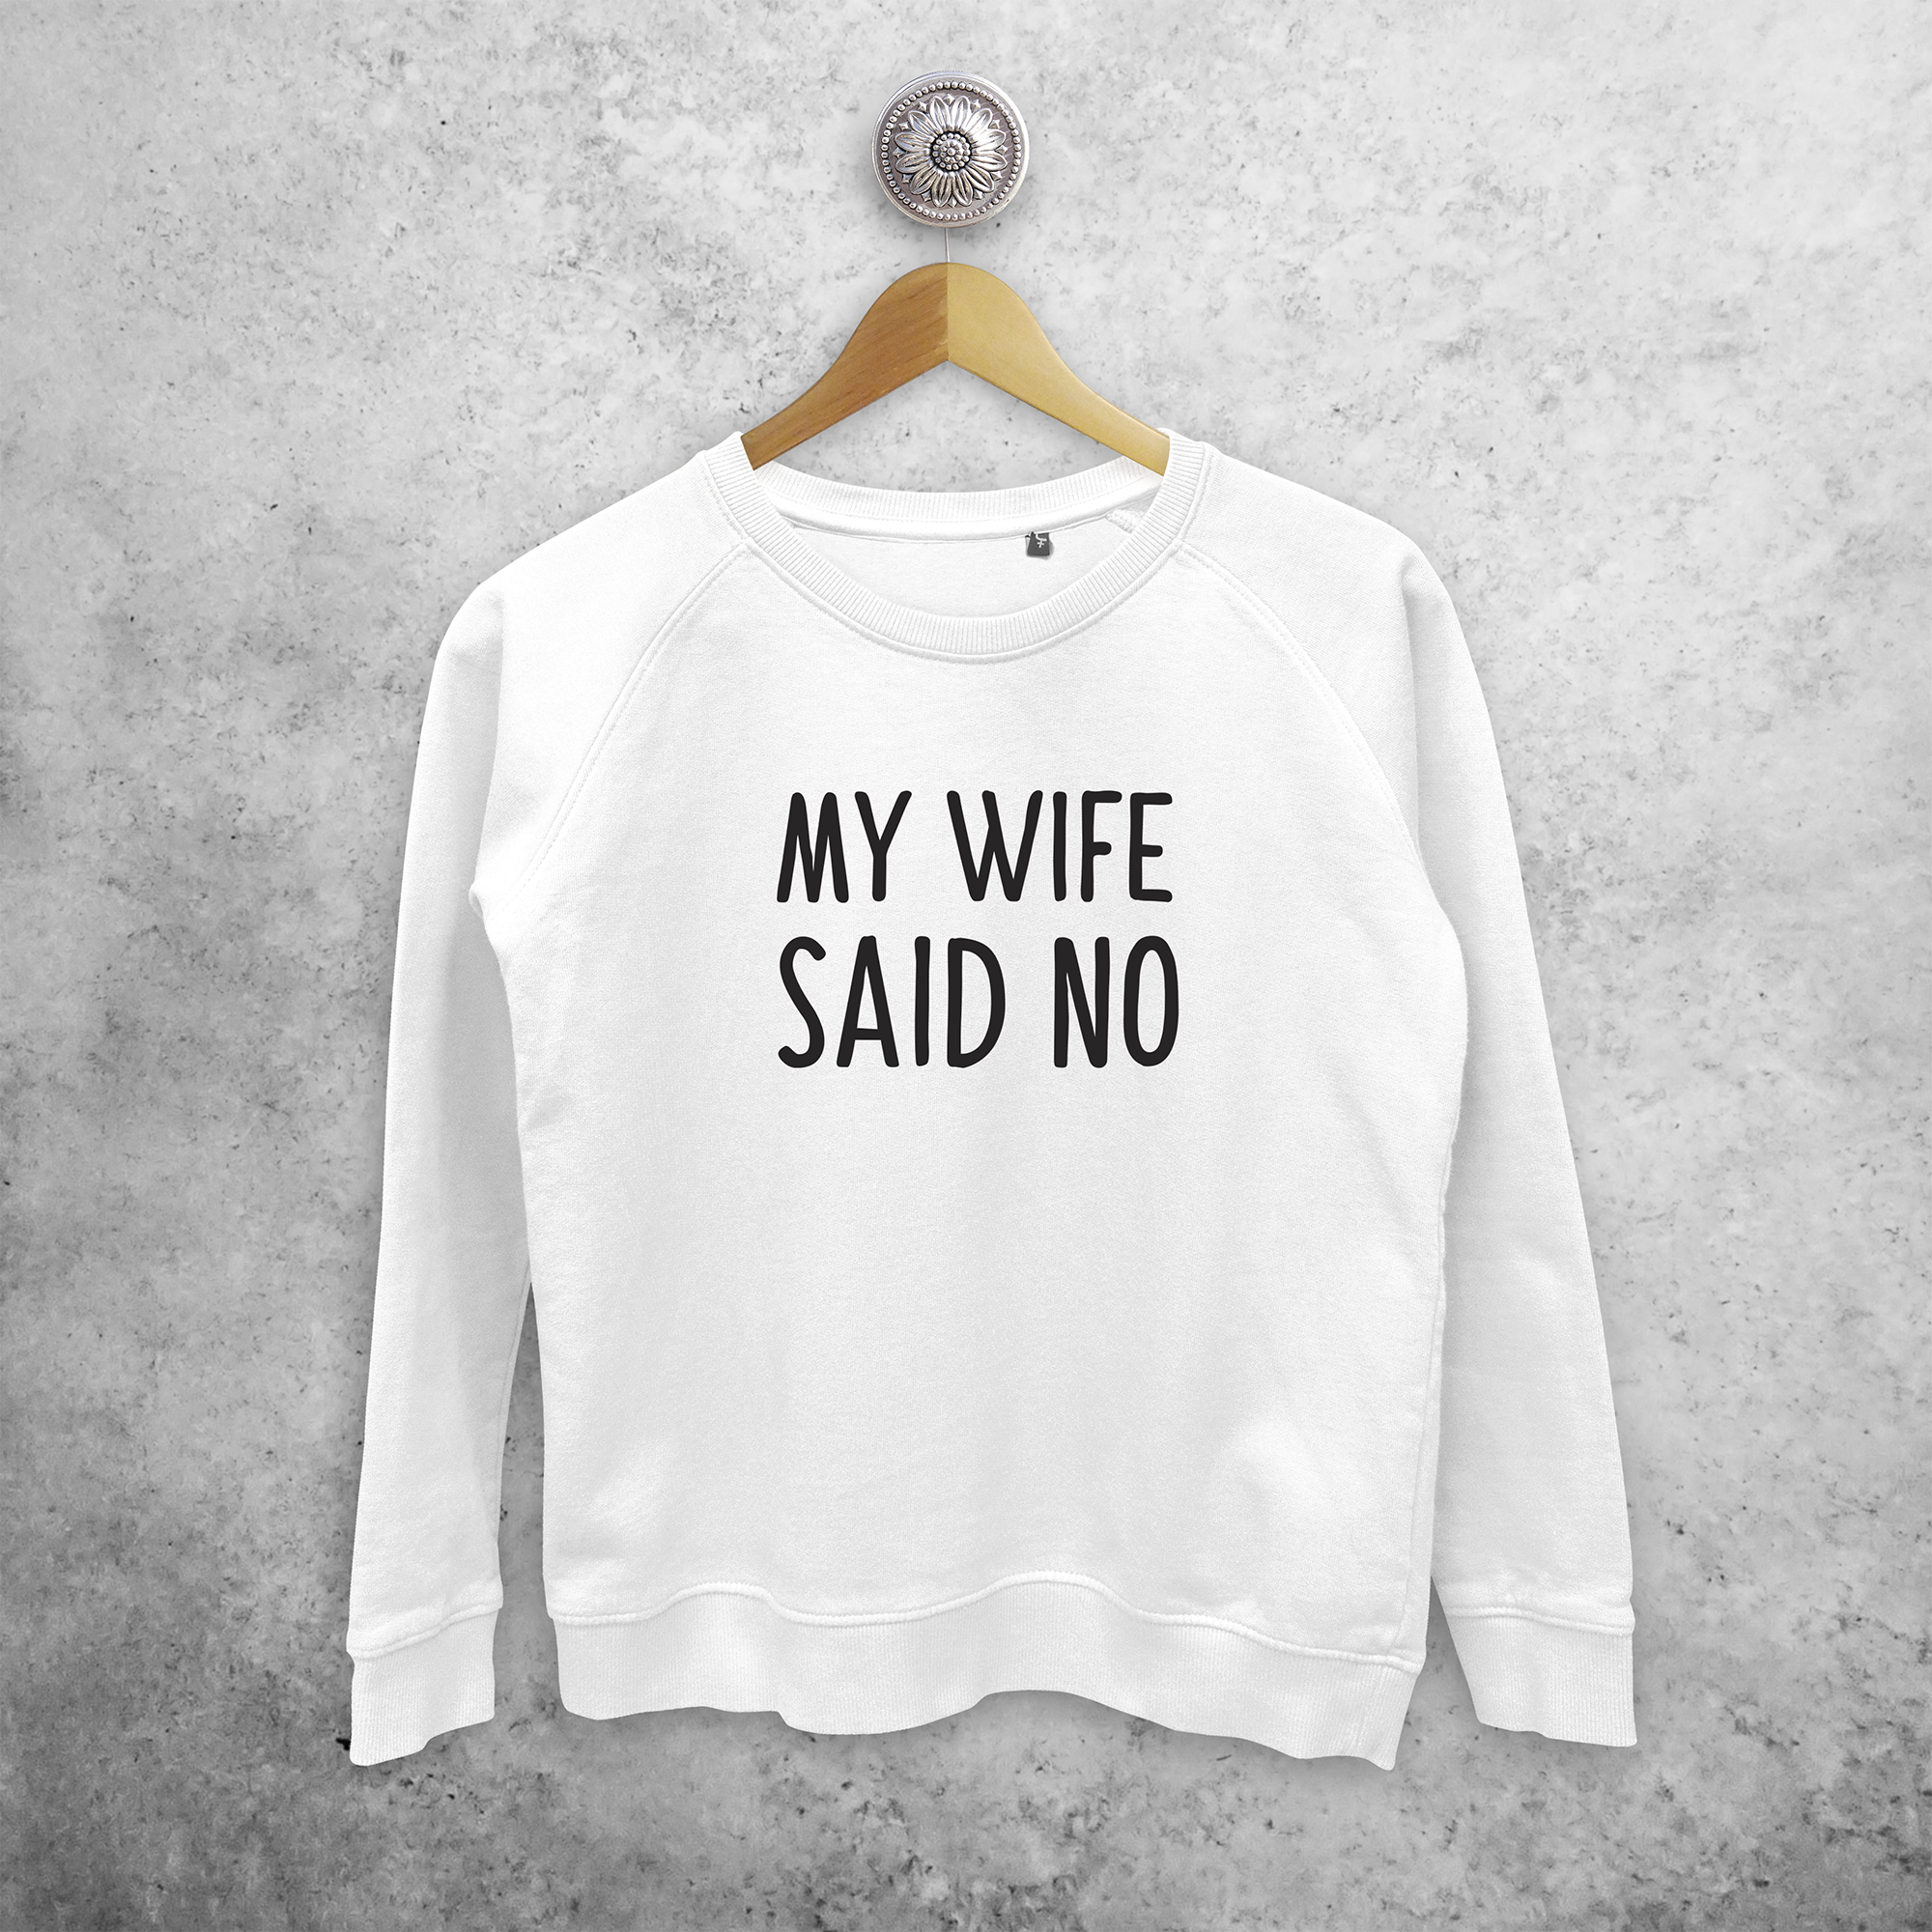 'My wife said no' sweater